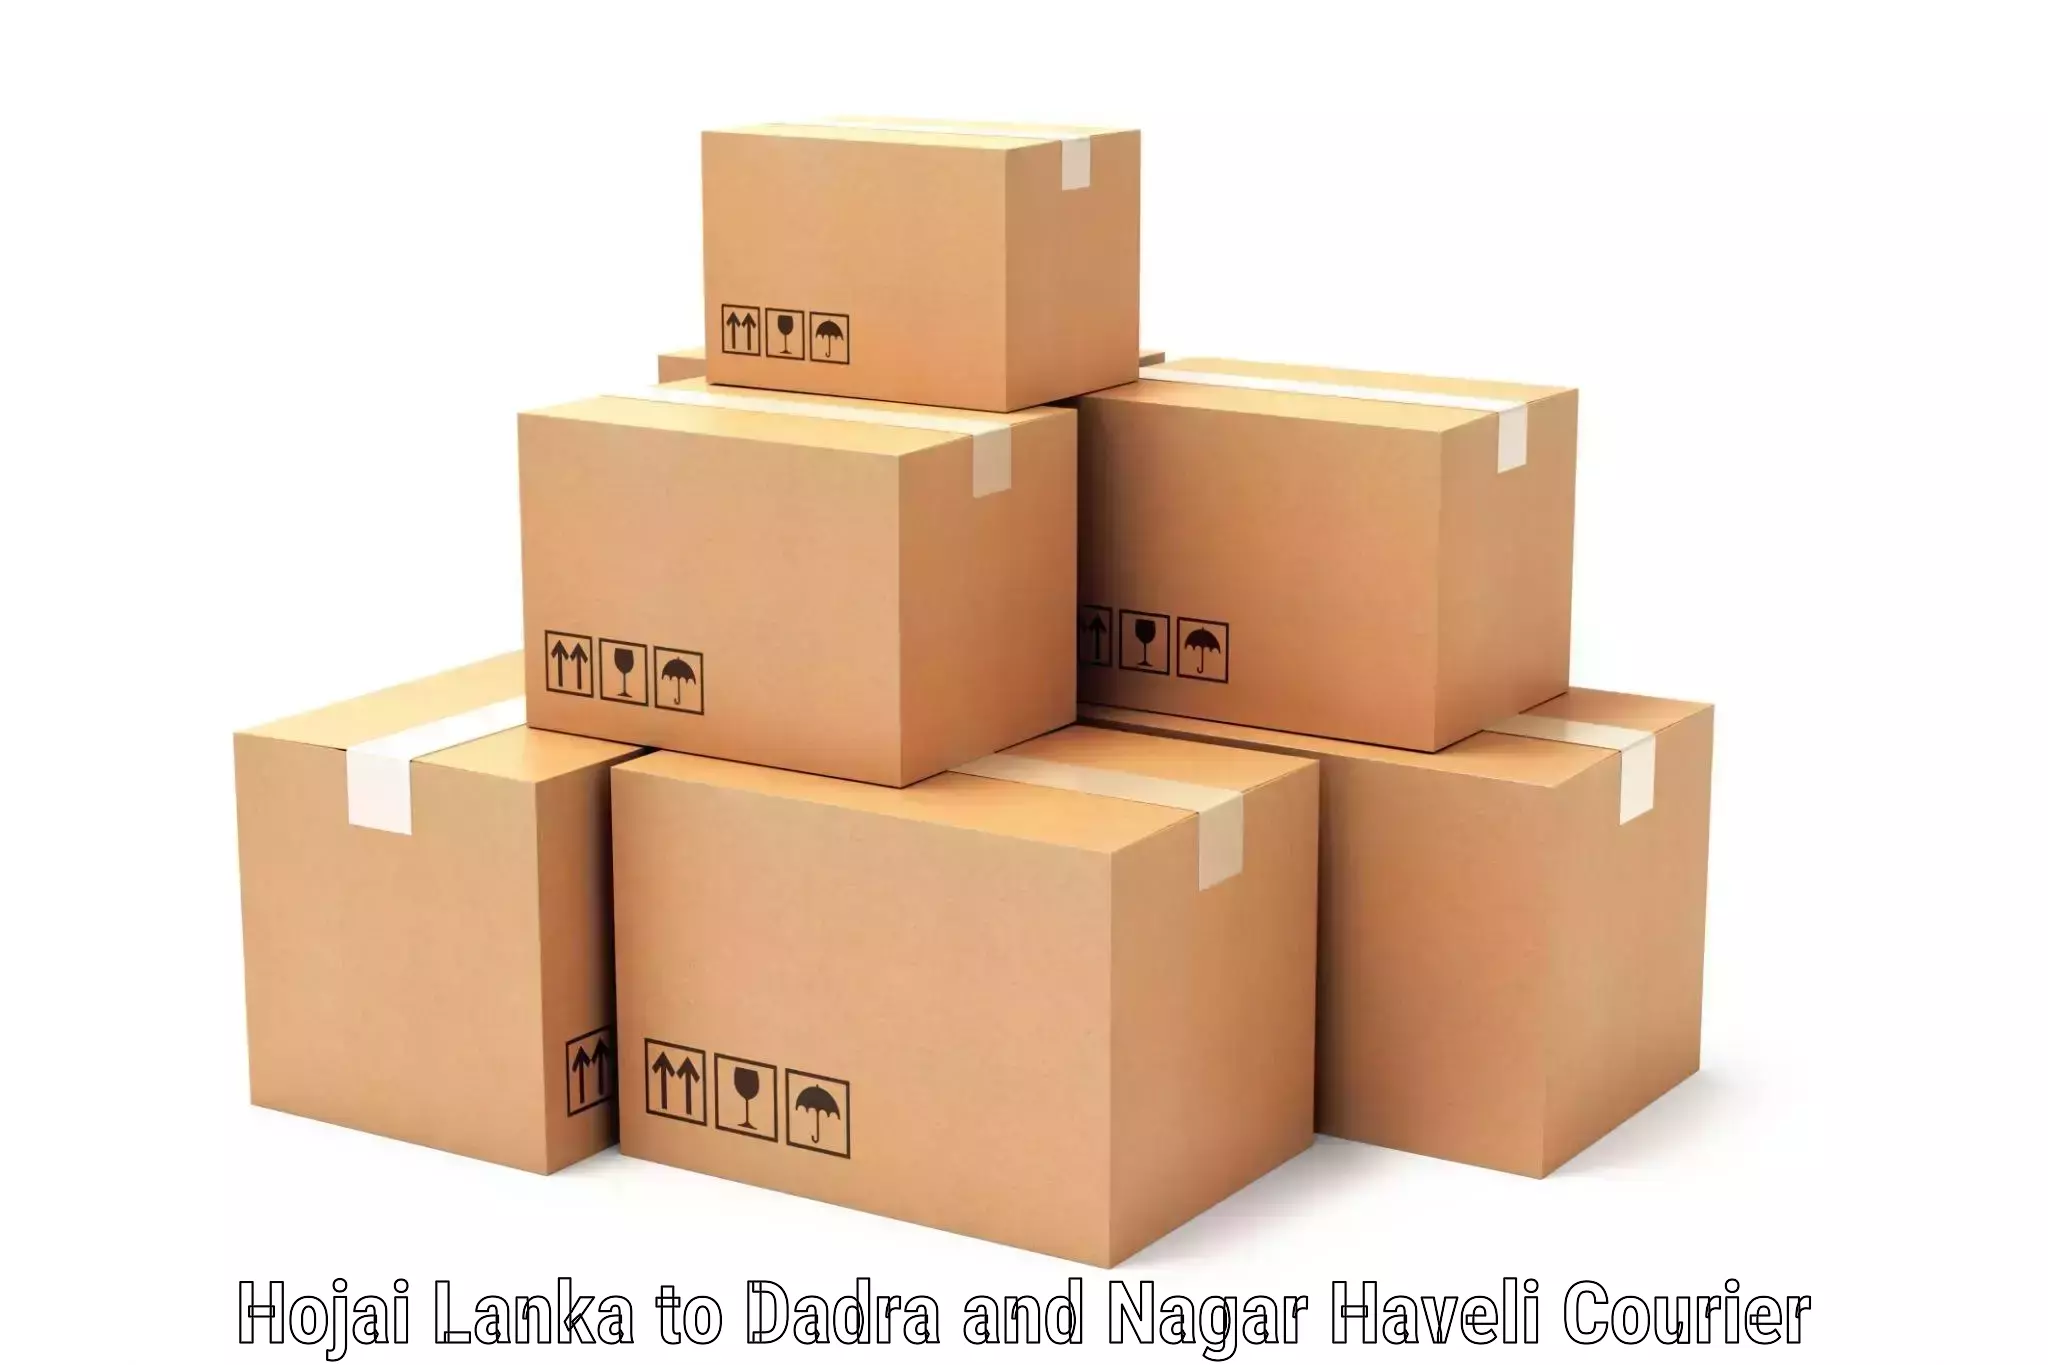 High-speed parcel service Hojai Lanka to Silvassa